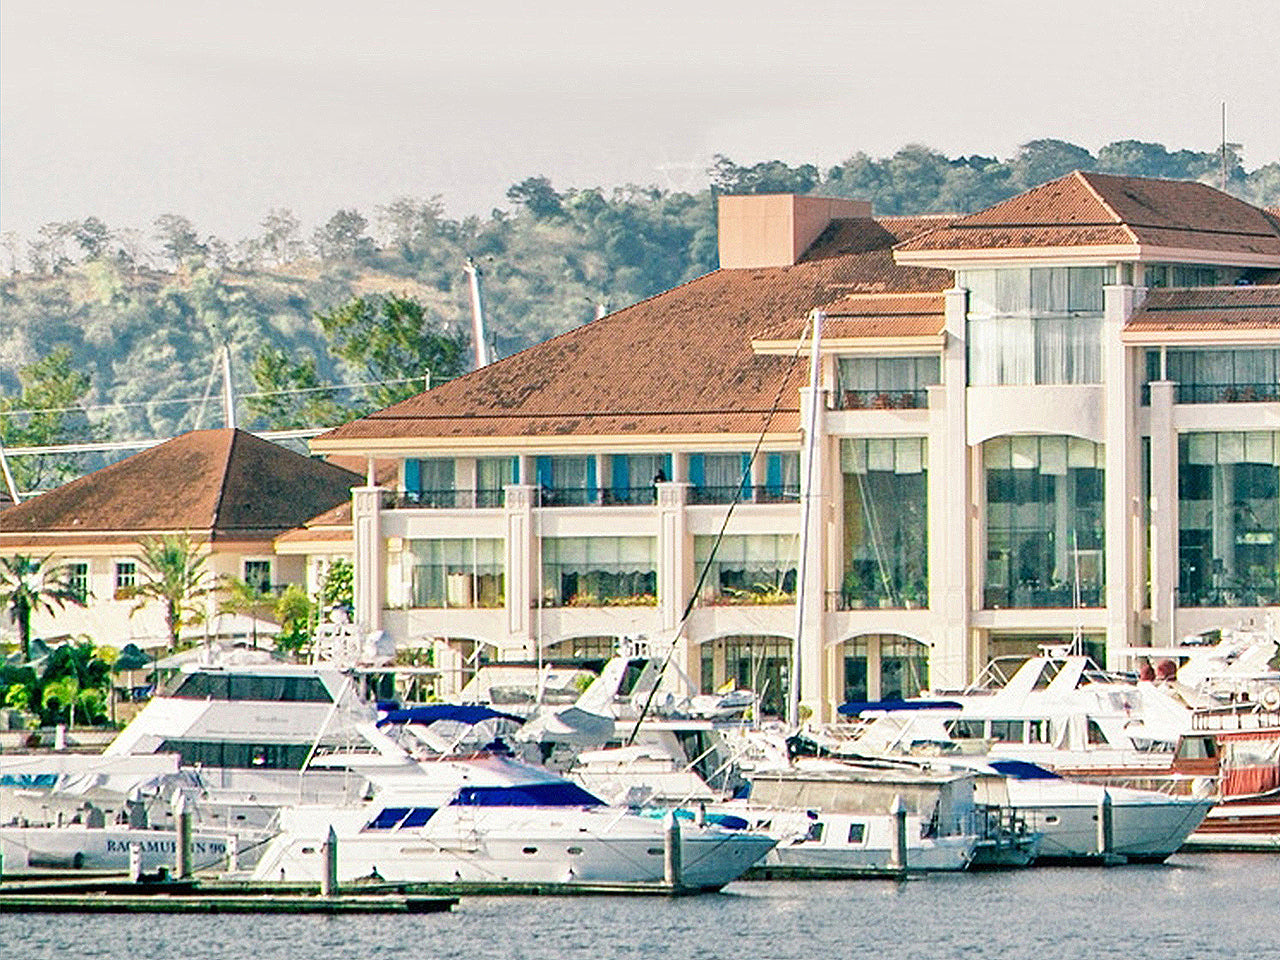 Subic Bay Yacht Club